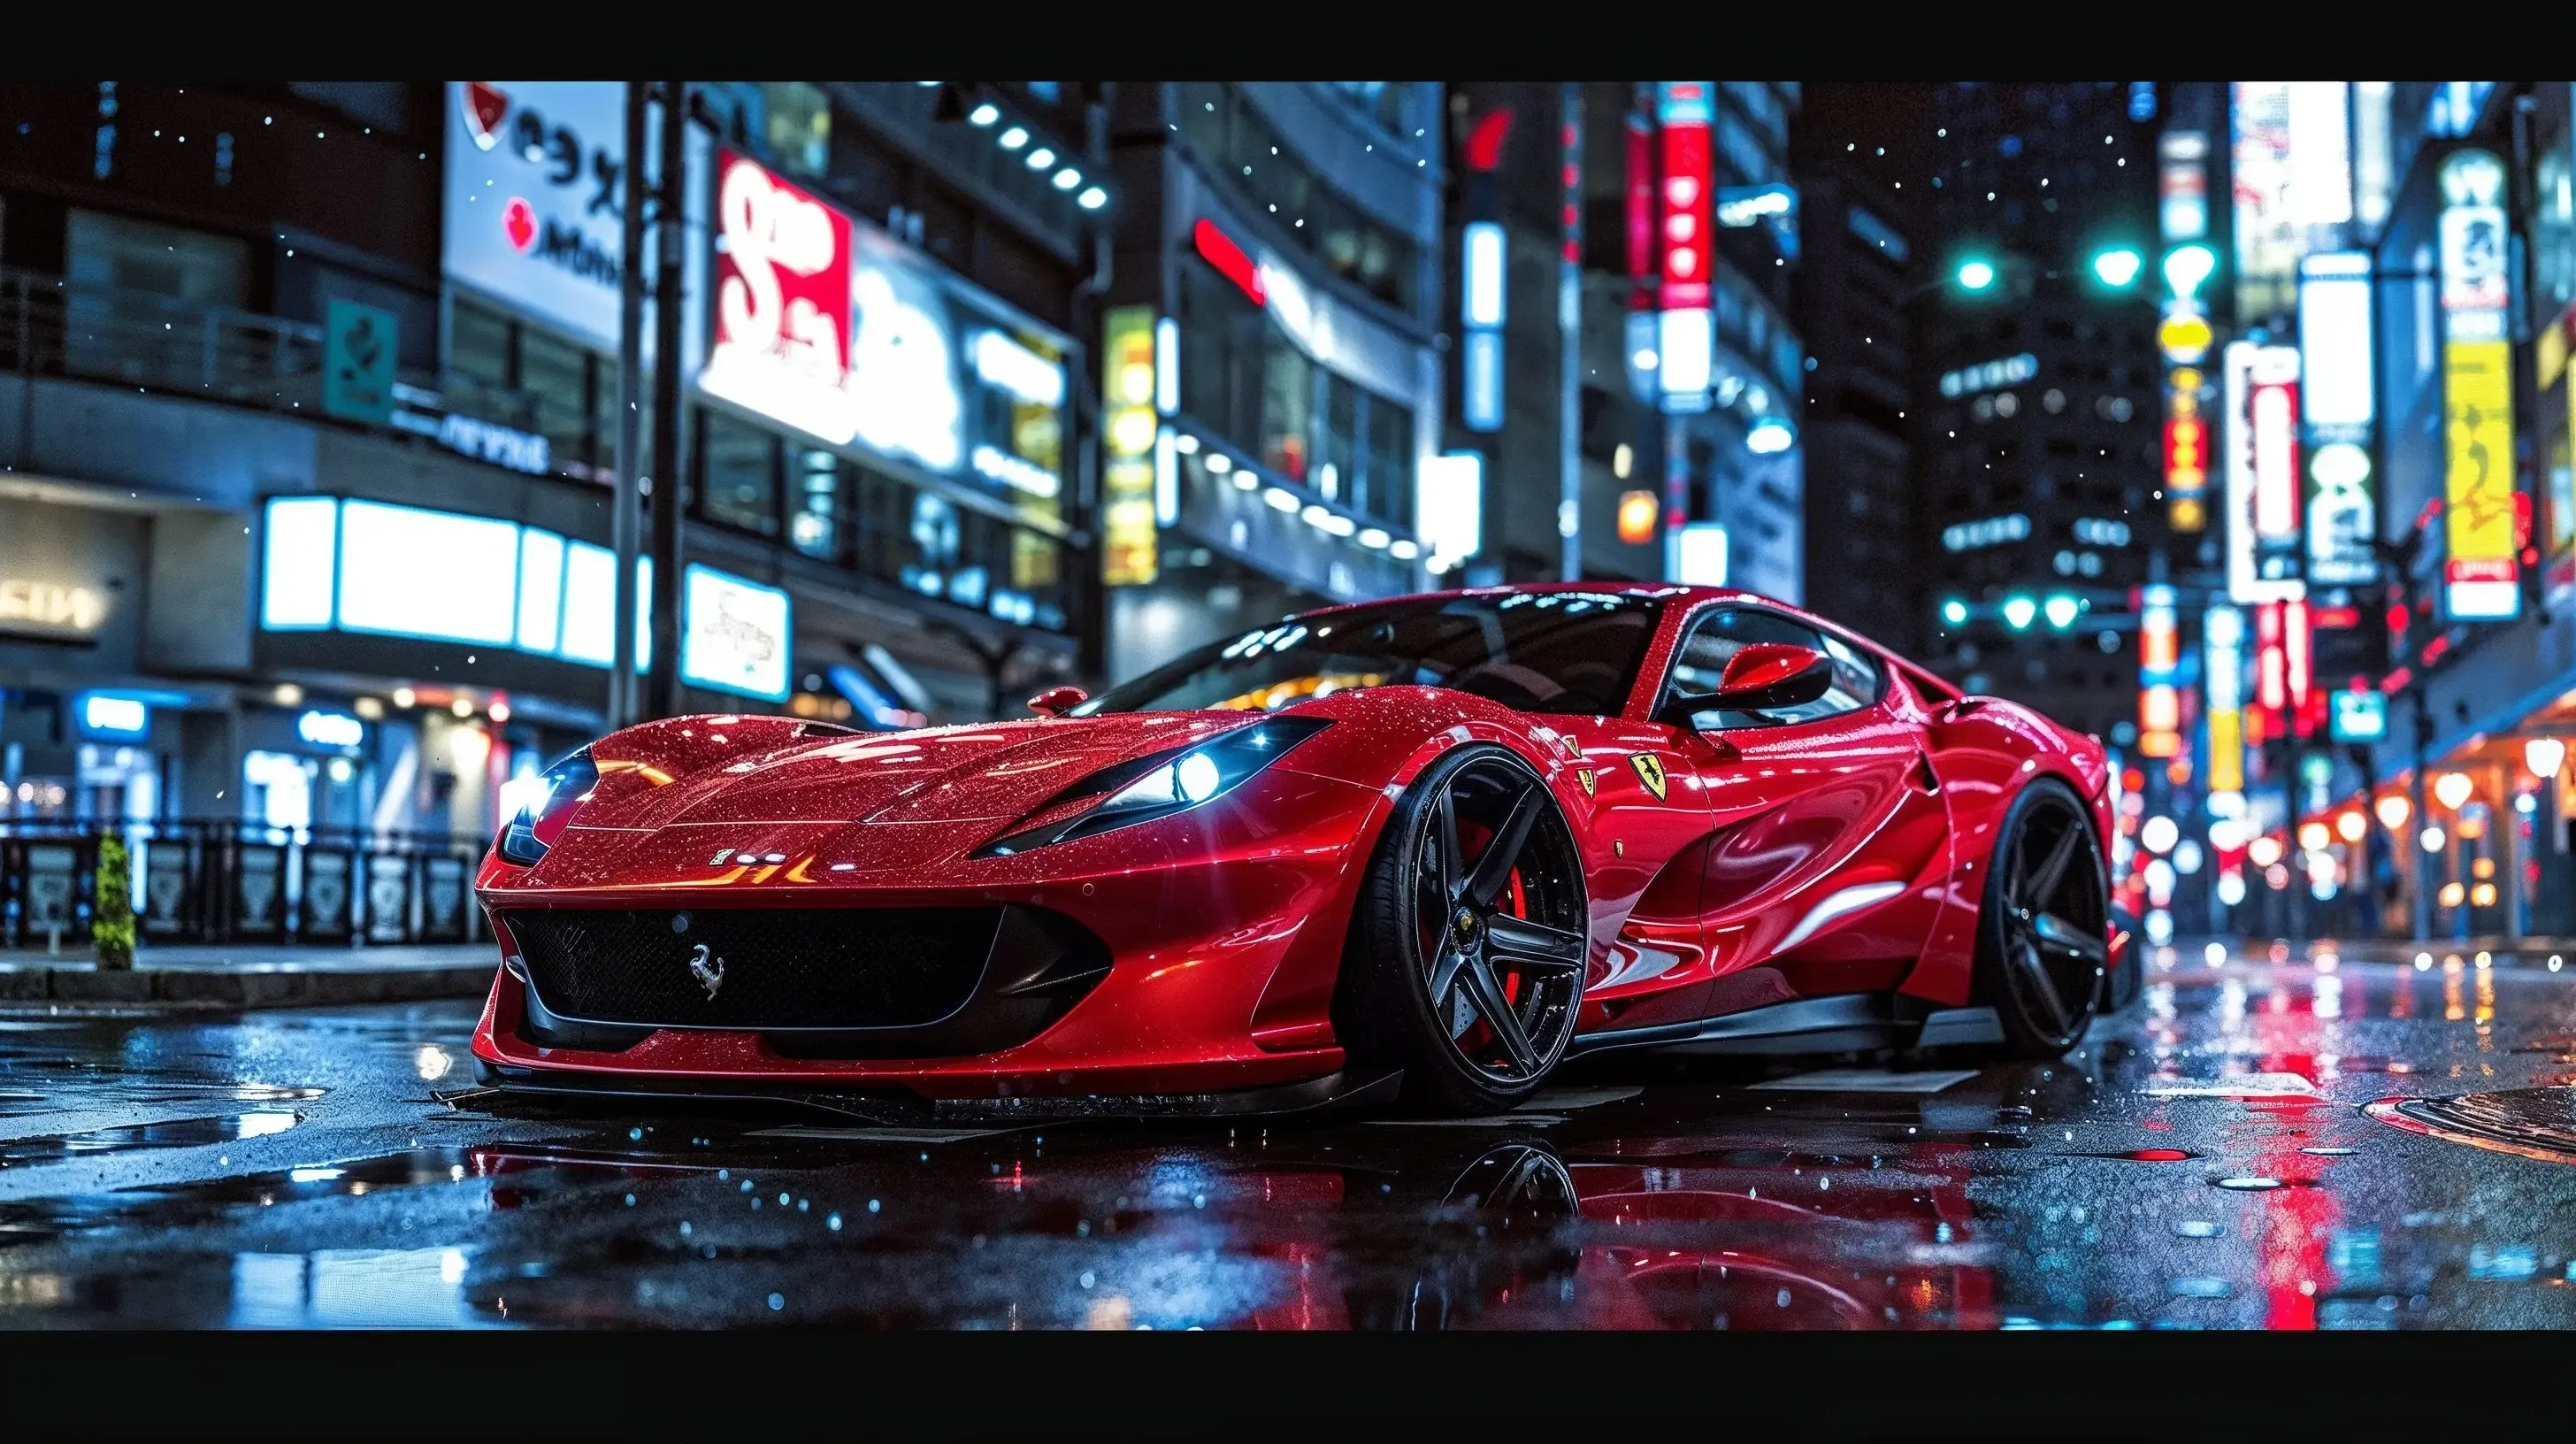 Red Ferrari in Urban City at Night